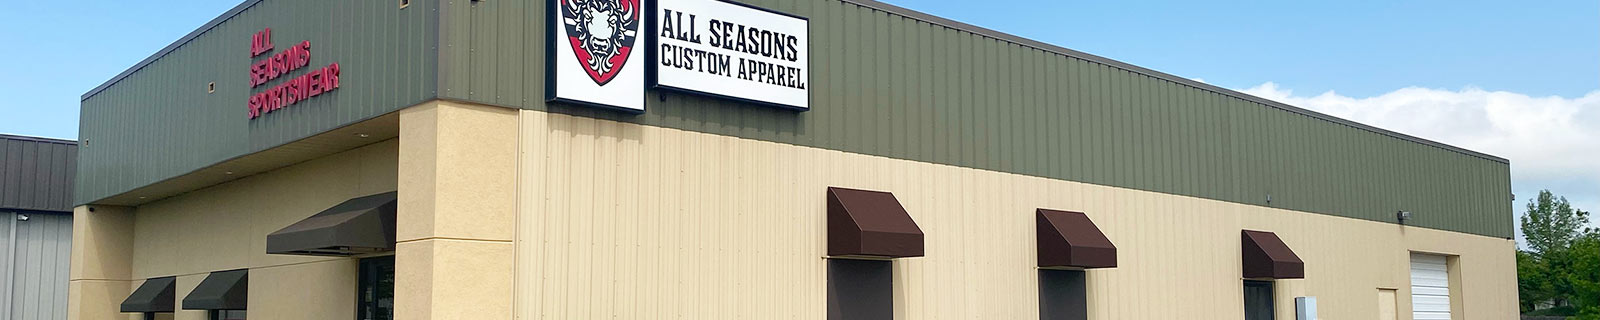 All Seasons Custom Apparel